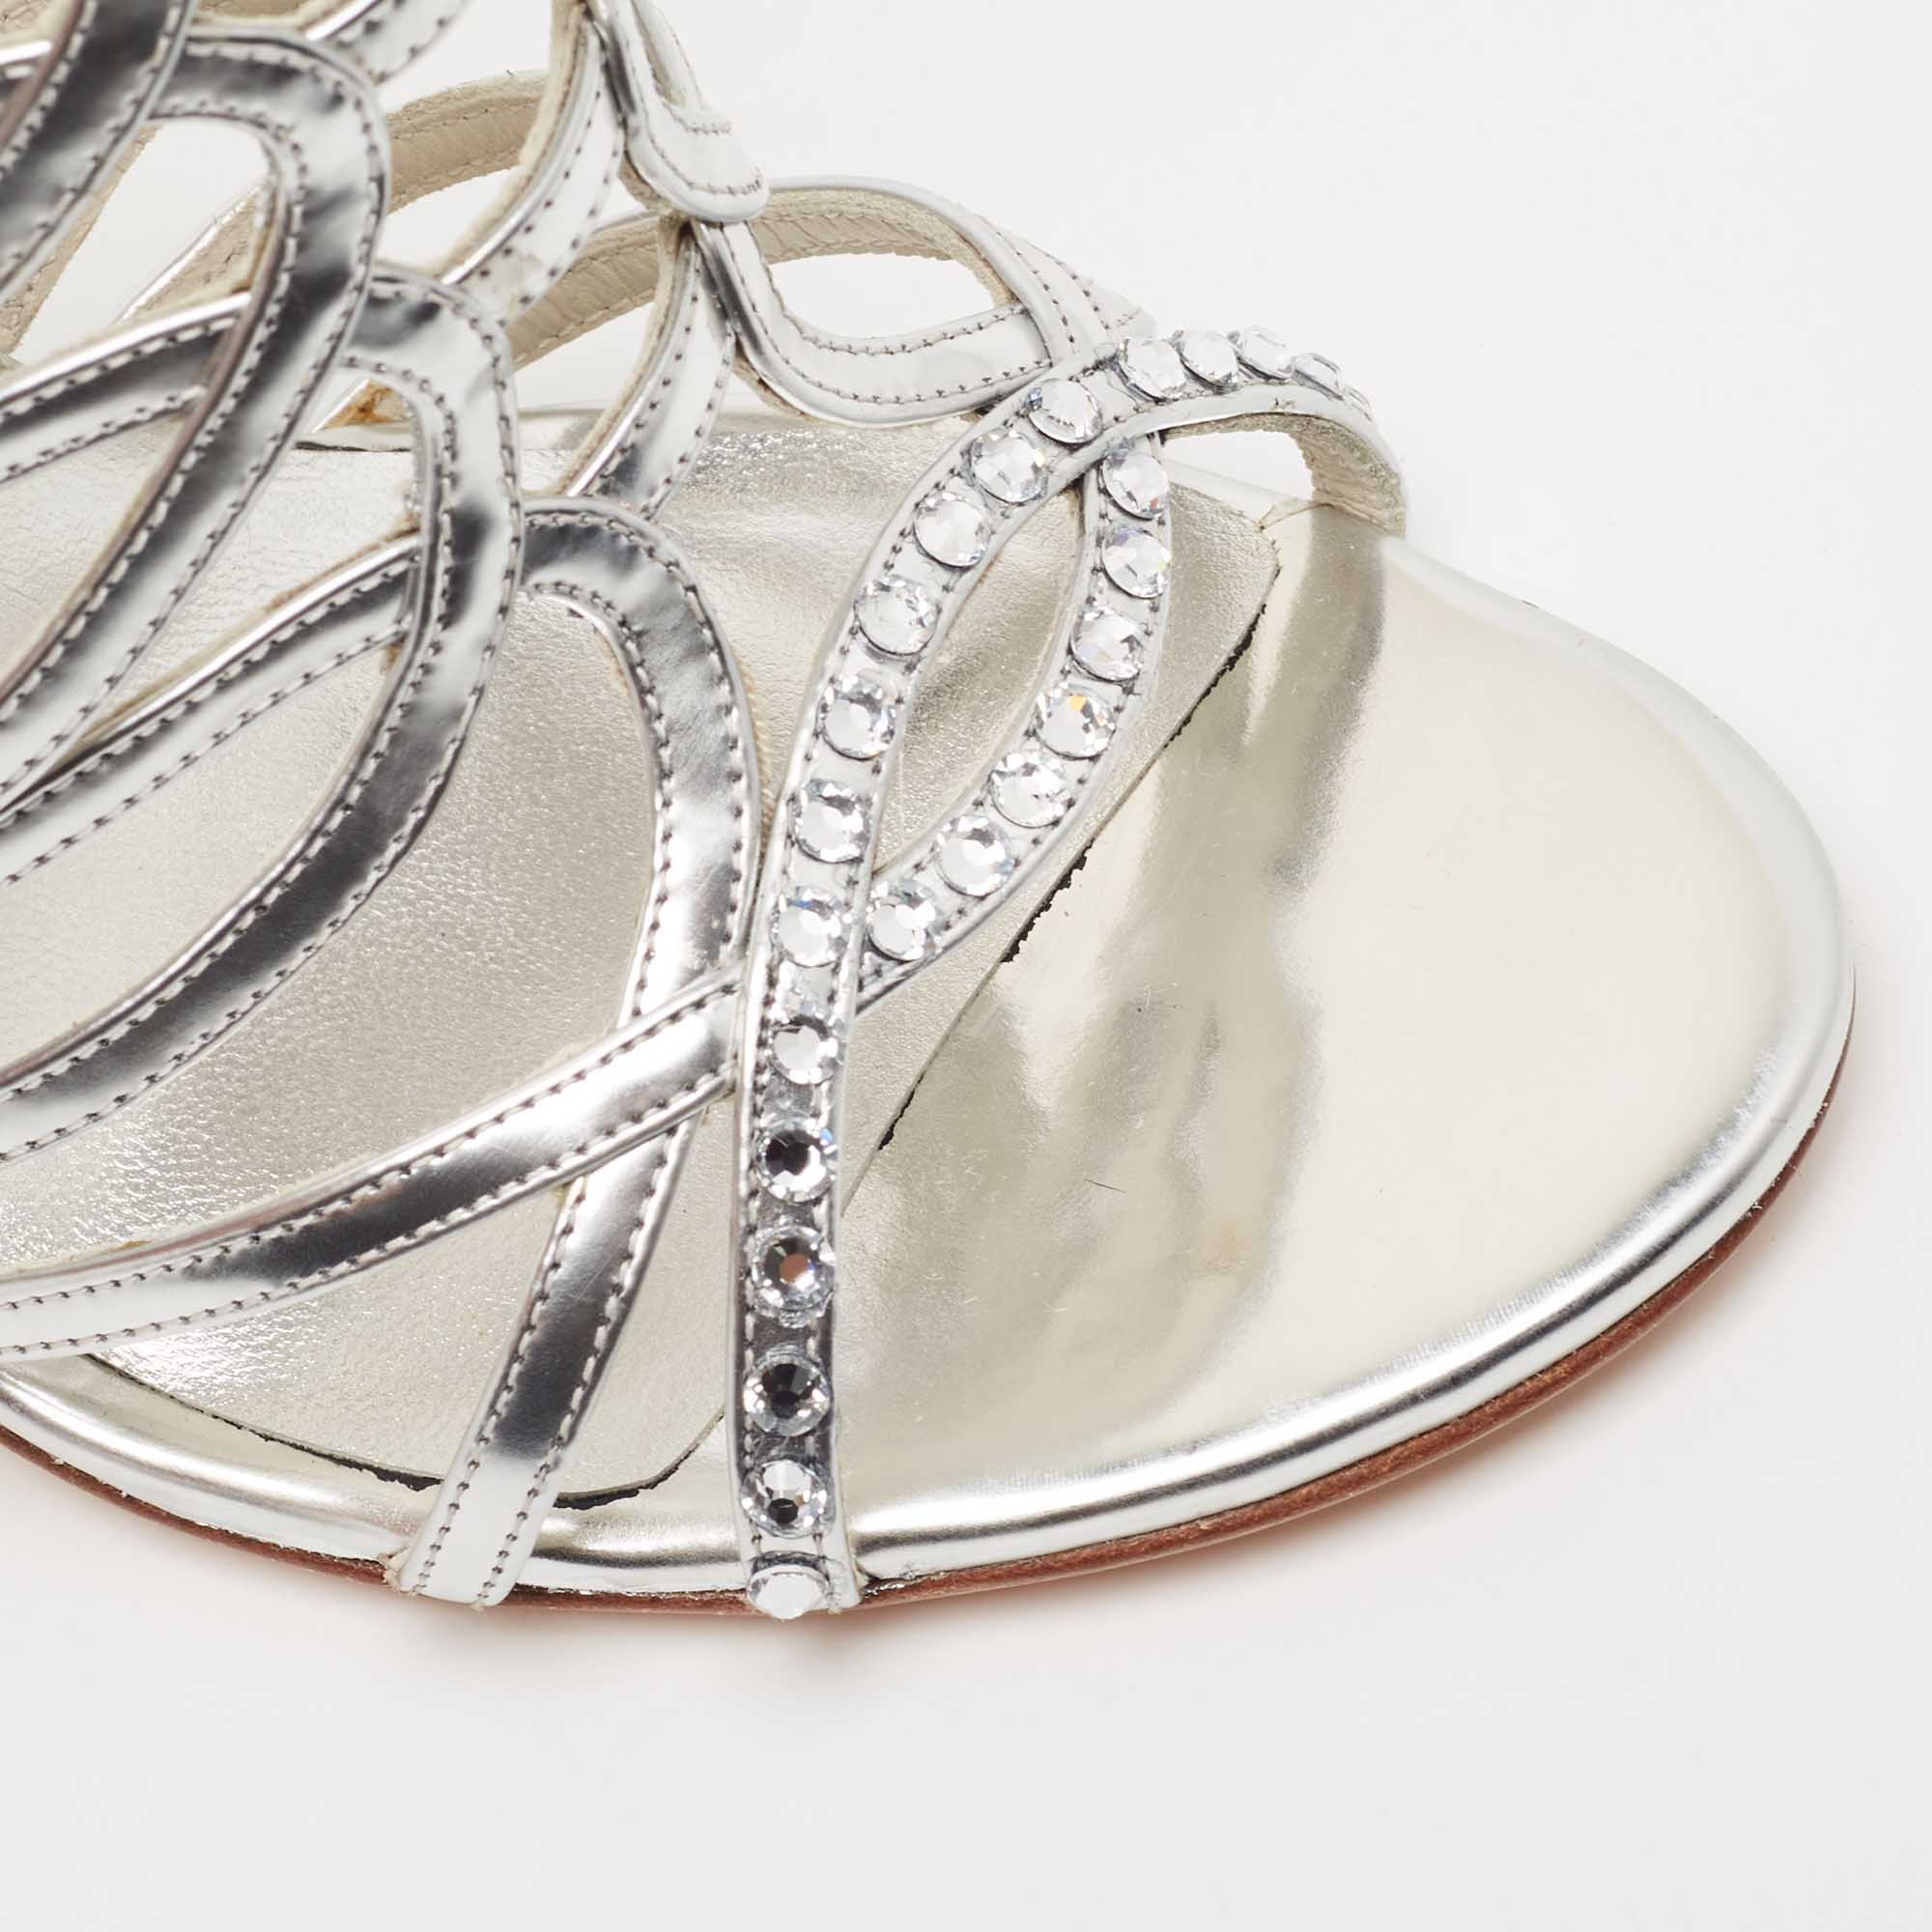 Stuart Weitzman Metallic Silver Leather Crystal Embellished Strappy Sandals Size 39.5